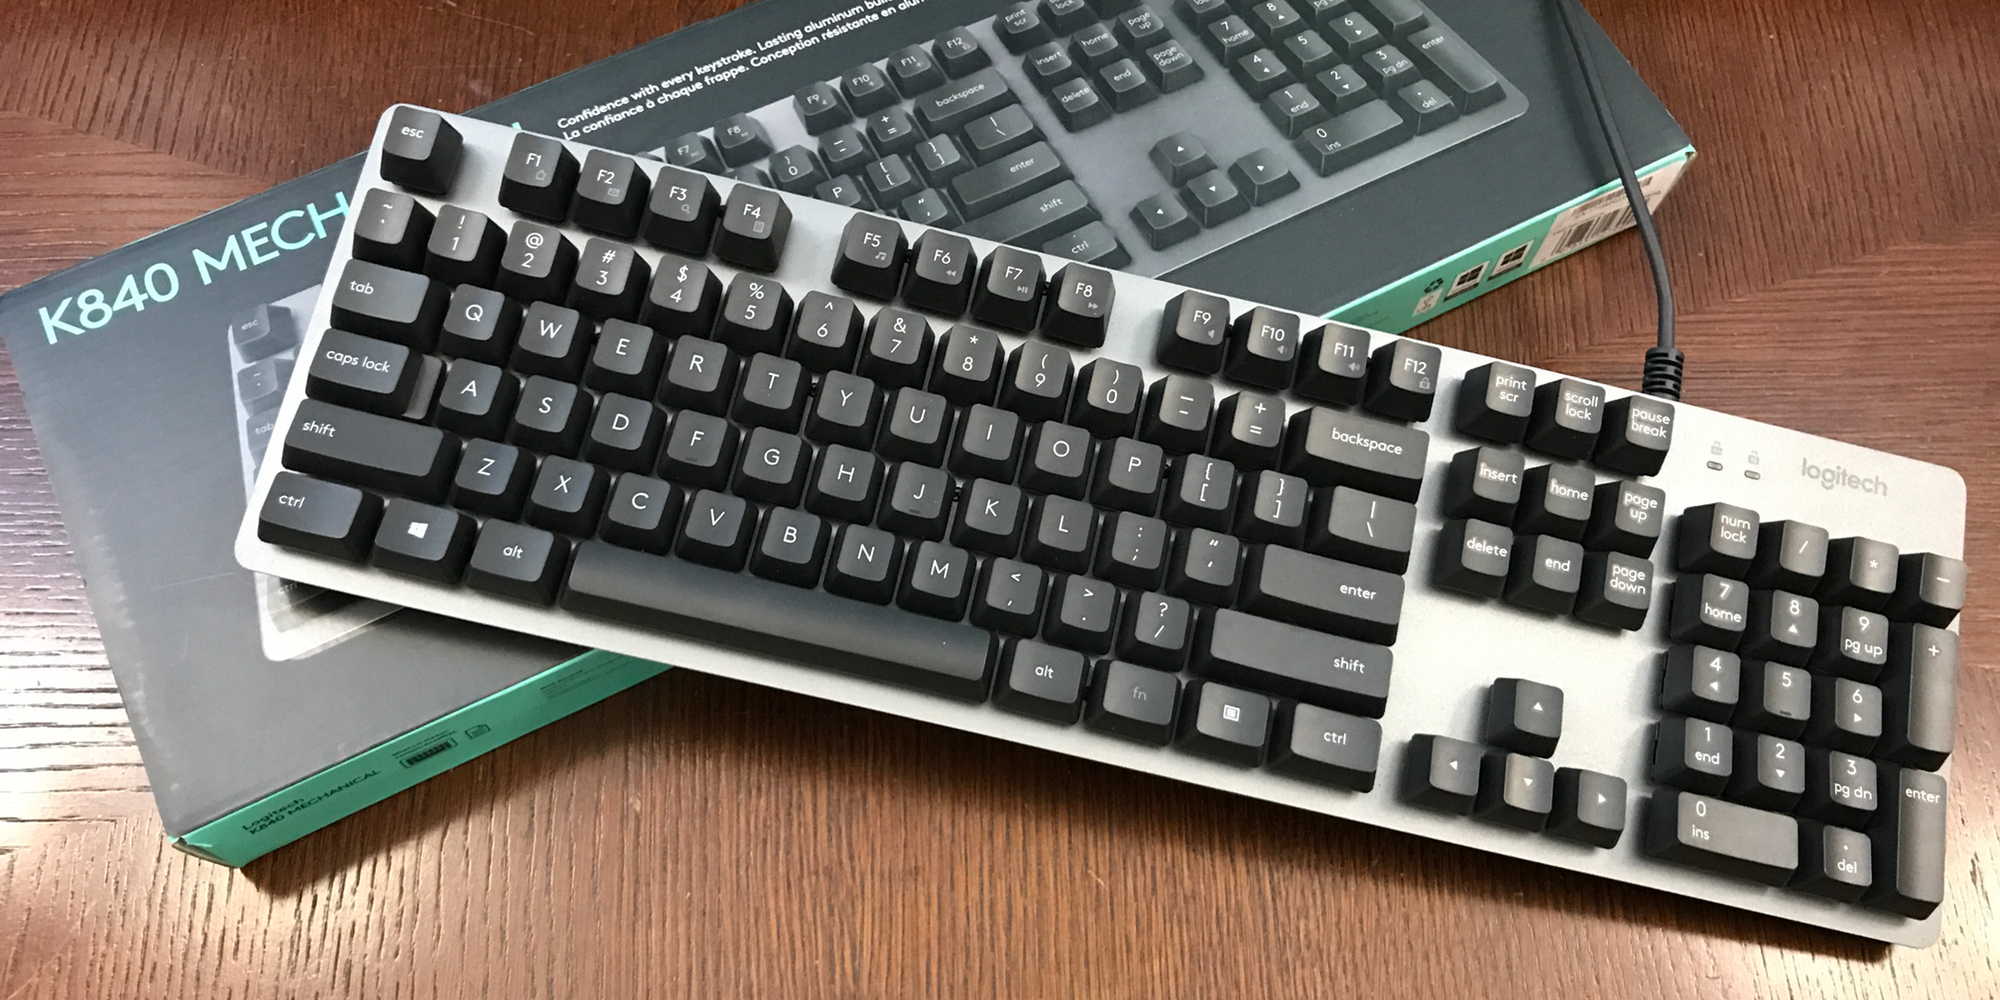 K840 Mechanical Keyboard drops back to $60 shipped (Reg. $75)